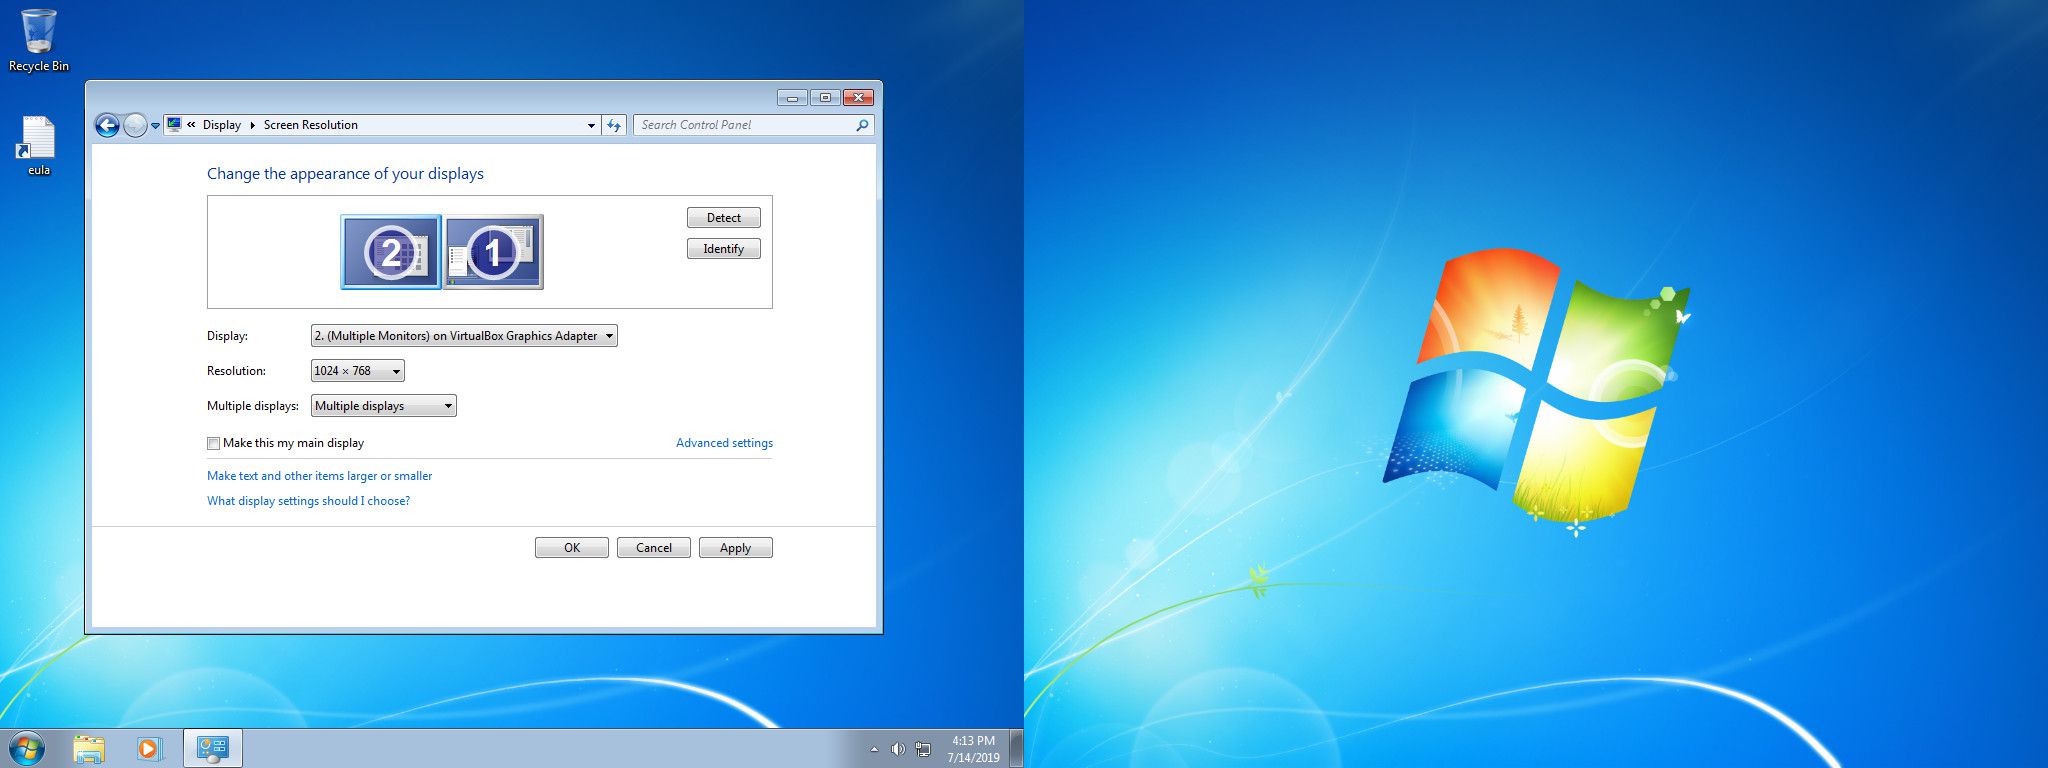 Windows 7 beeldschermen rangschikken